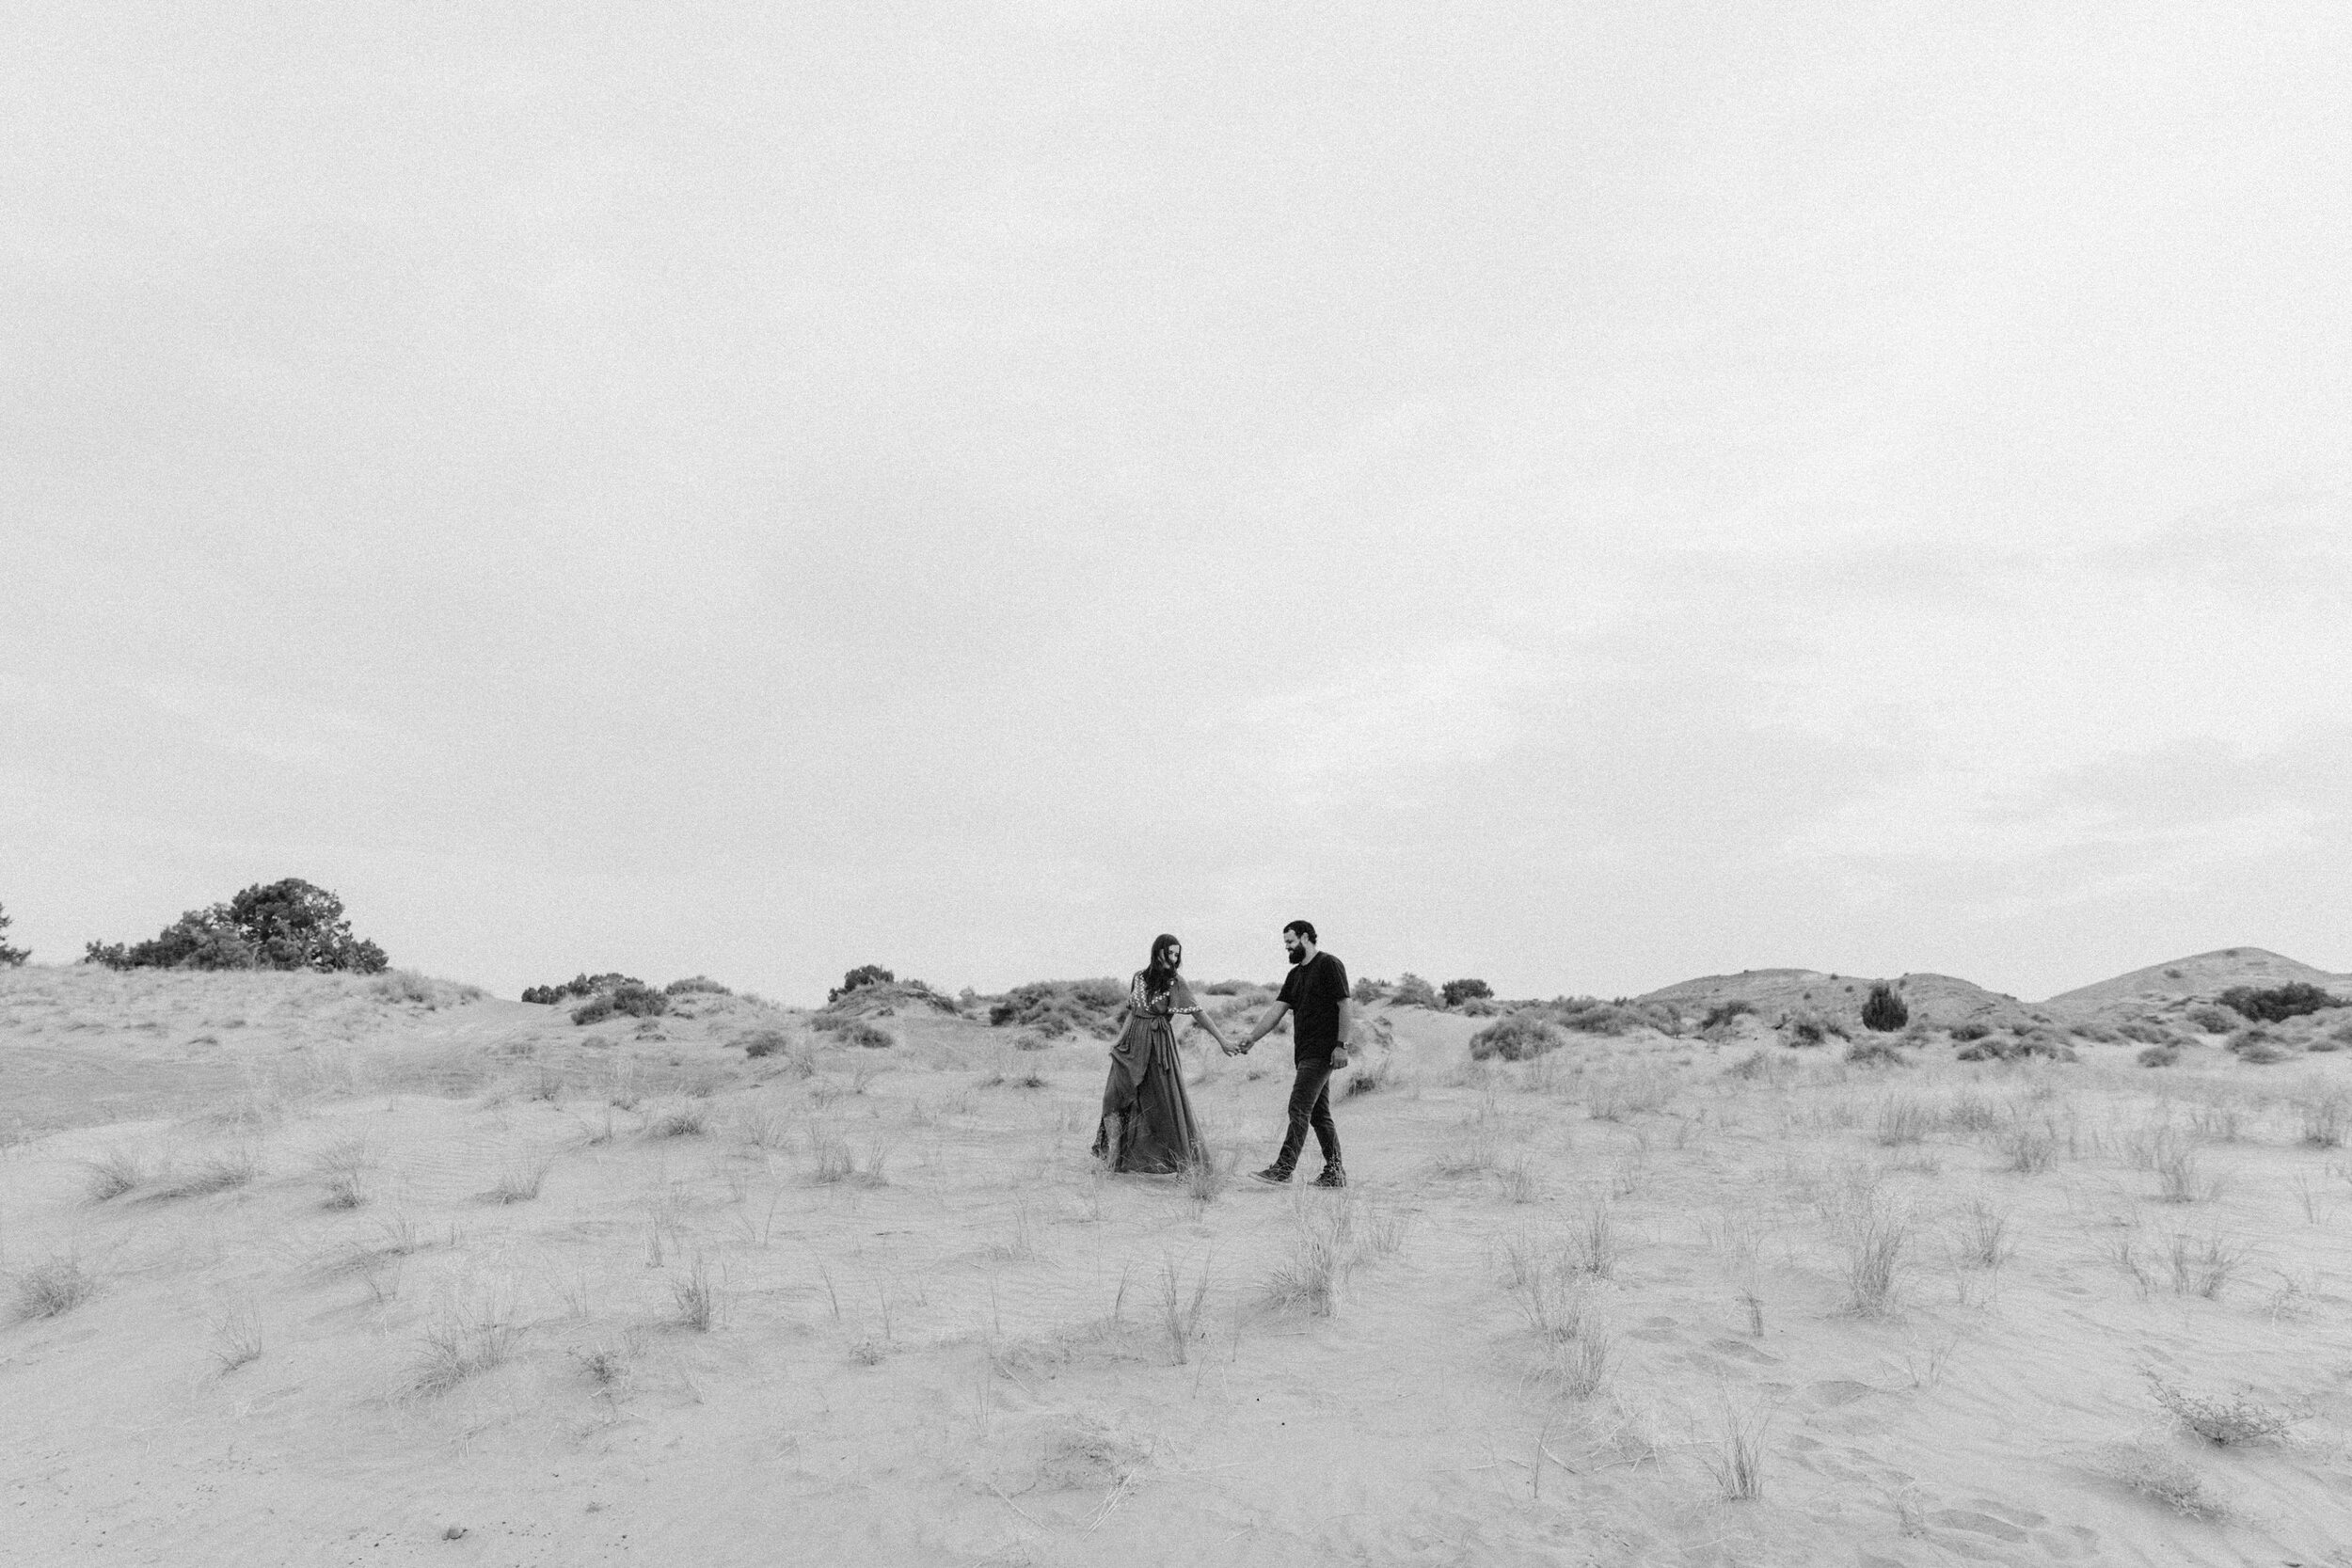 couple walking holding hands on sandy desert landscape